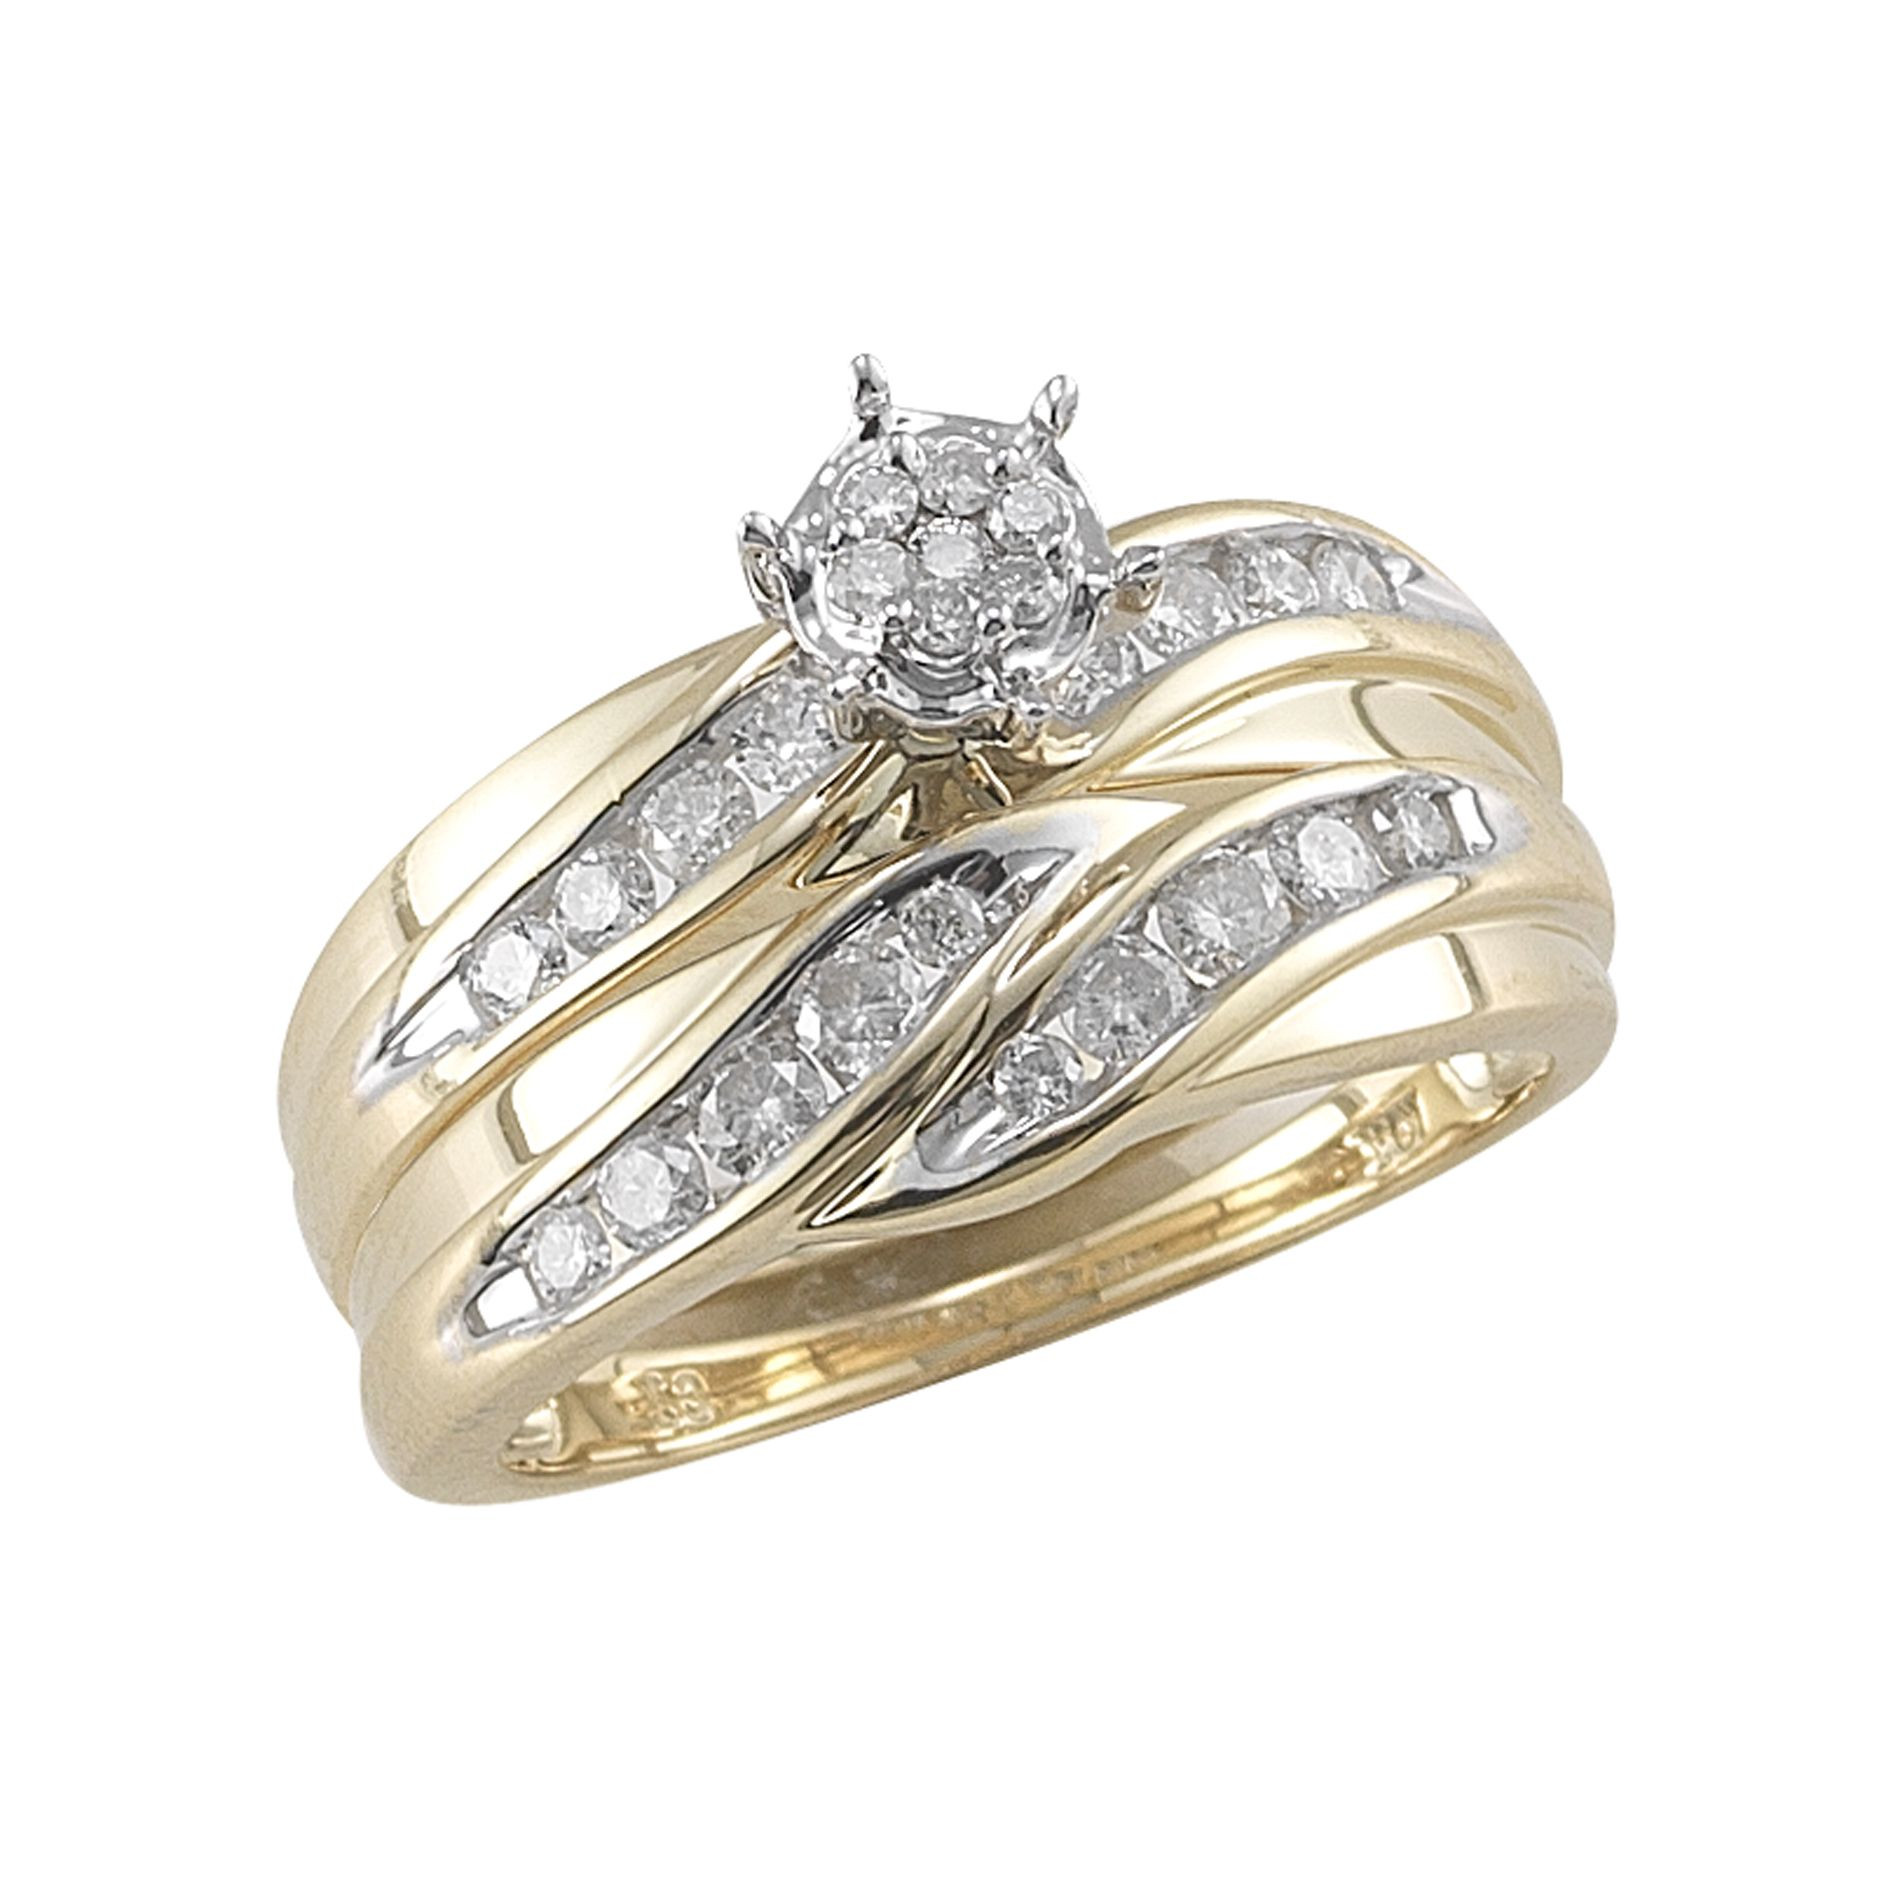 Kmart Wedding Ring Sets
 10Kt Yellow Gold 1 2Cttw Diamond Bridal Set